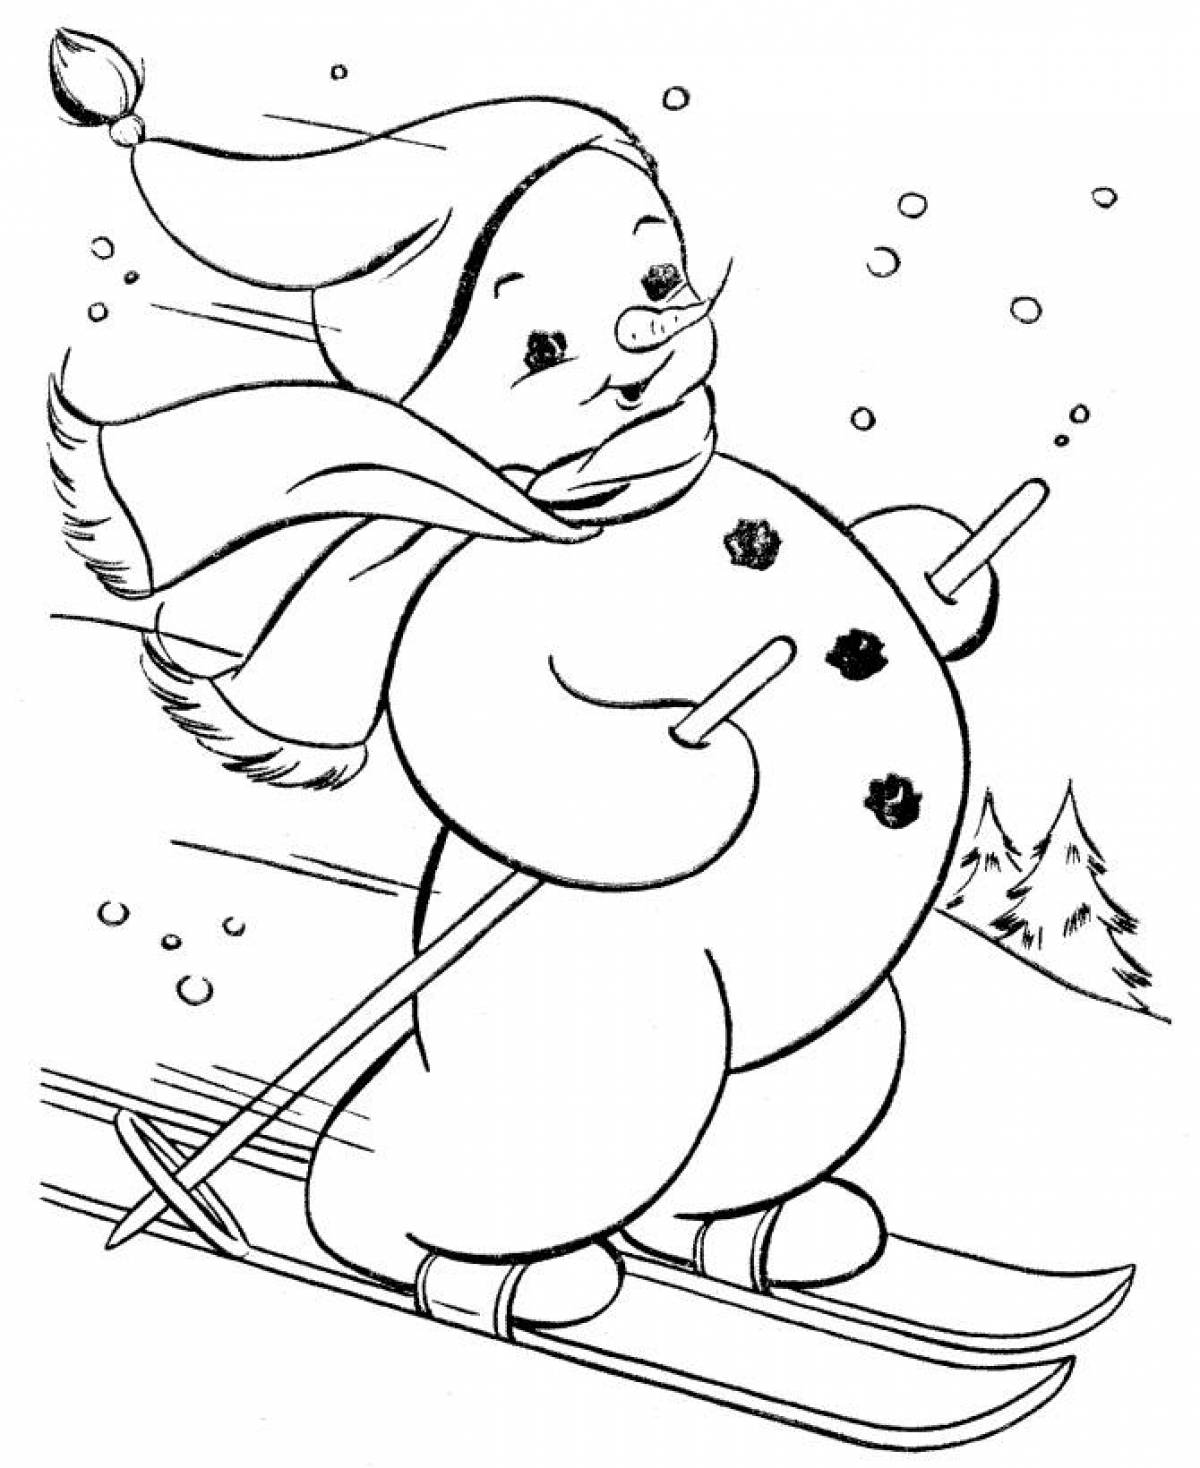 Snowman on skis